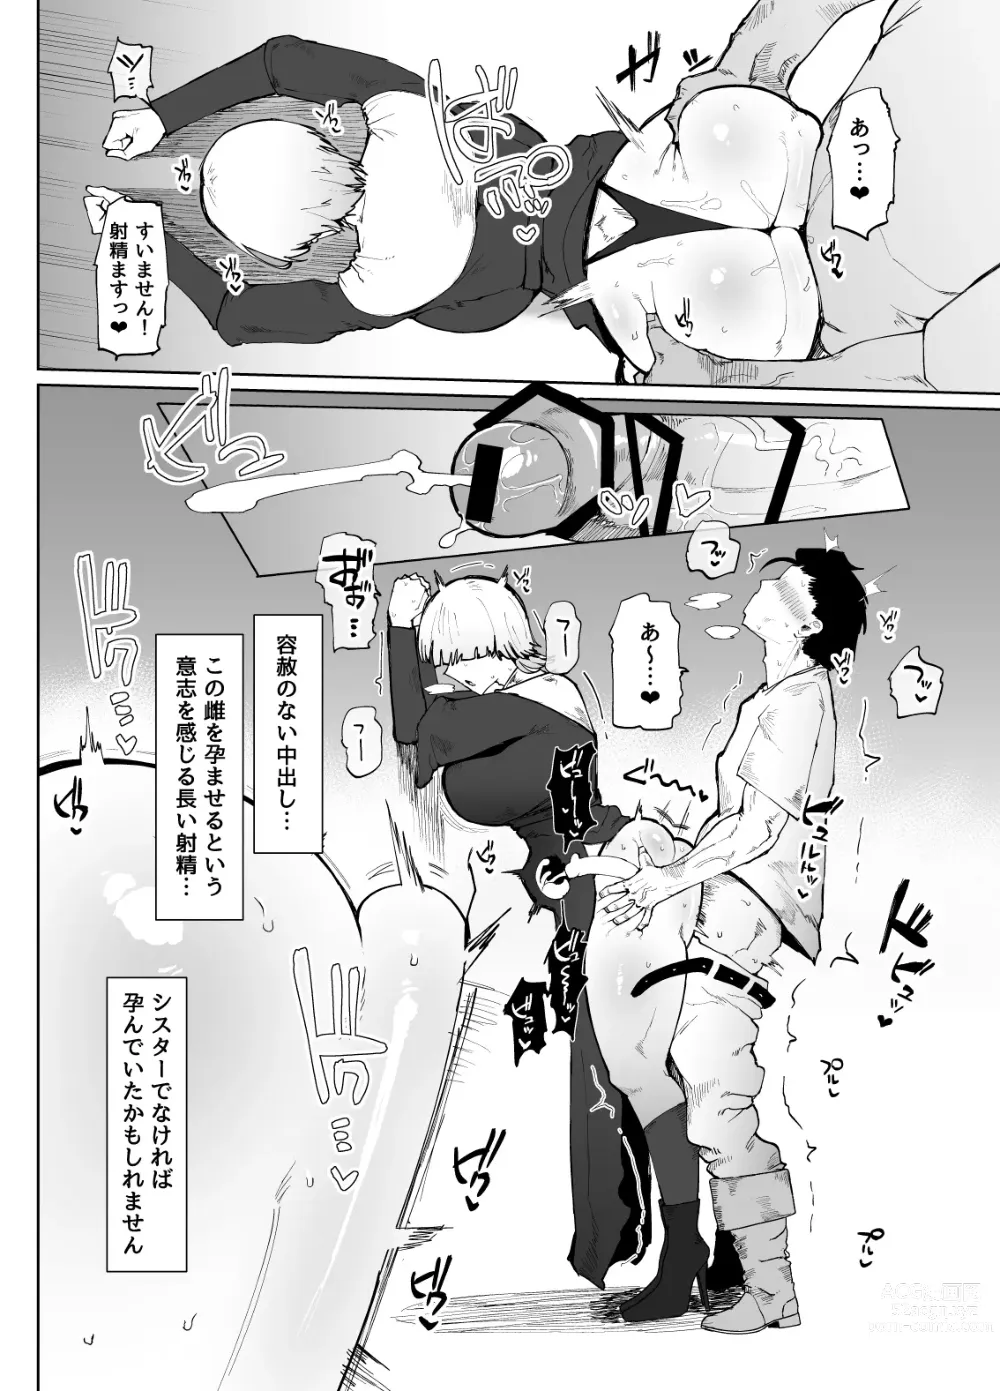 Page 7 of doujinshi 糸目でデカケツで絶対に孕まないオナホシスター